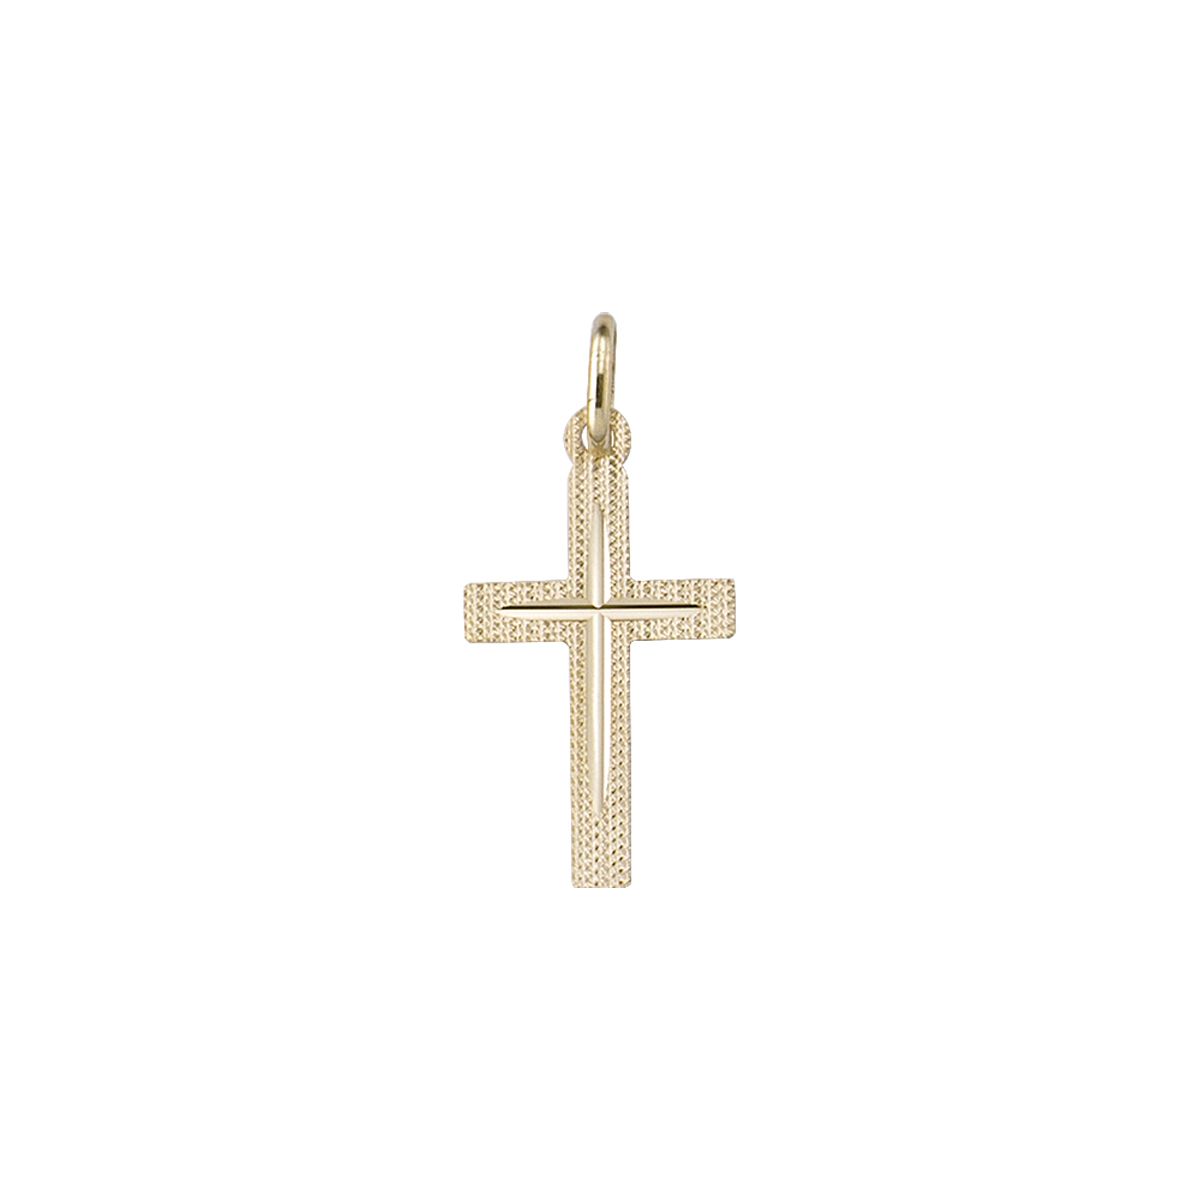 X0403, Gold Cross, Patterned Design